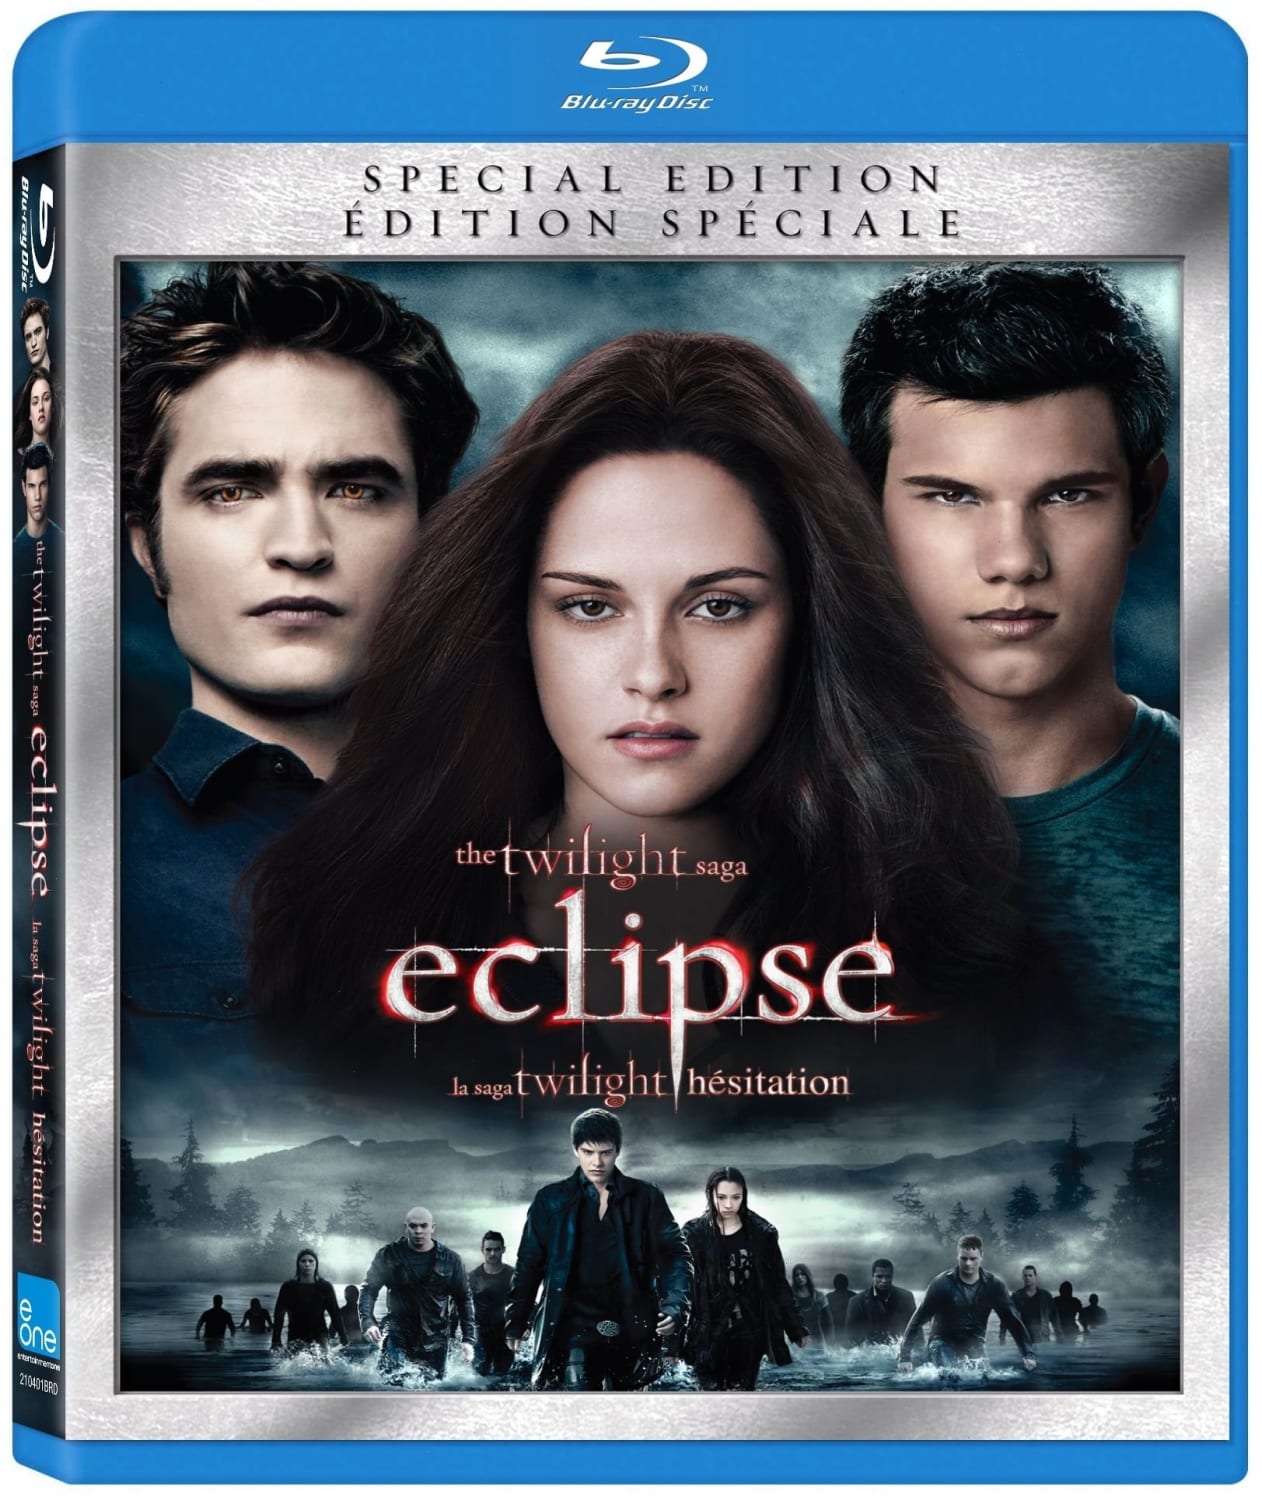 The Twilight Saga: Eclipse (Blu-ray) on MovieShack